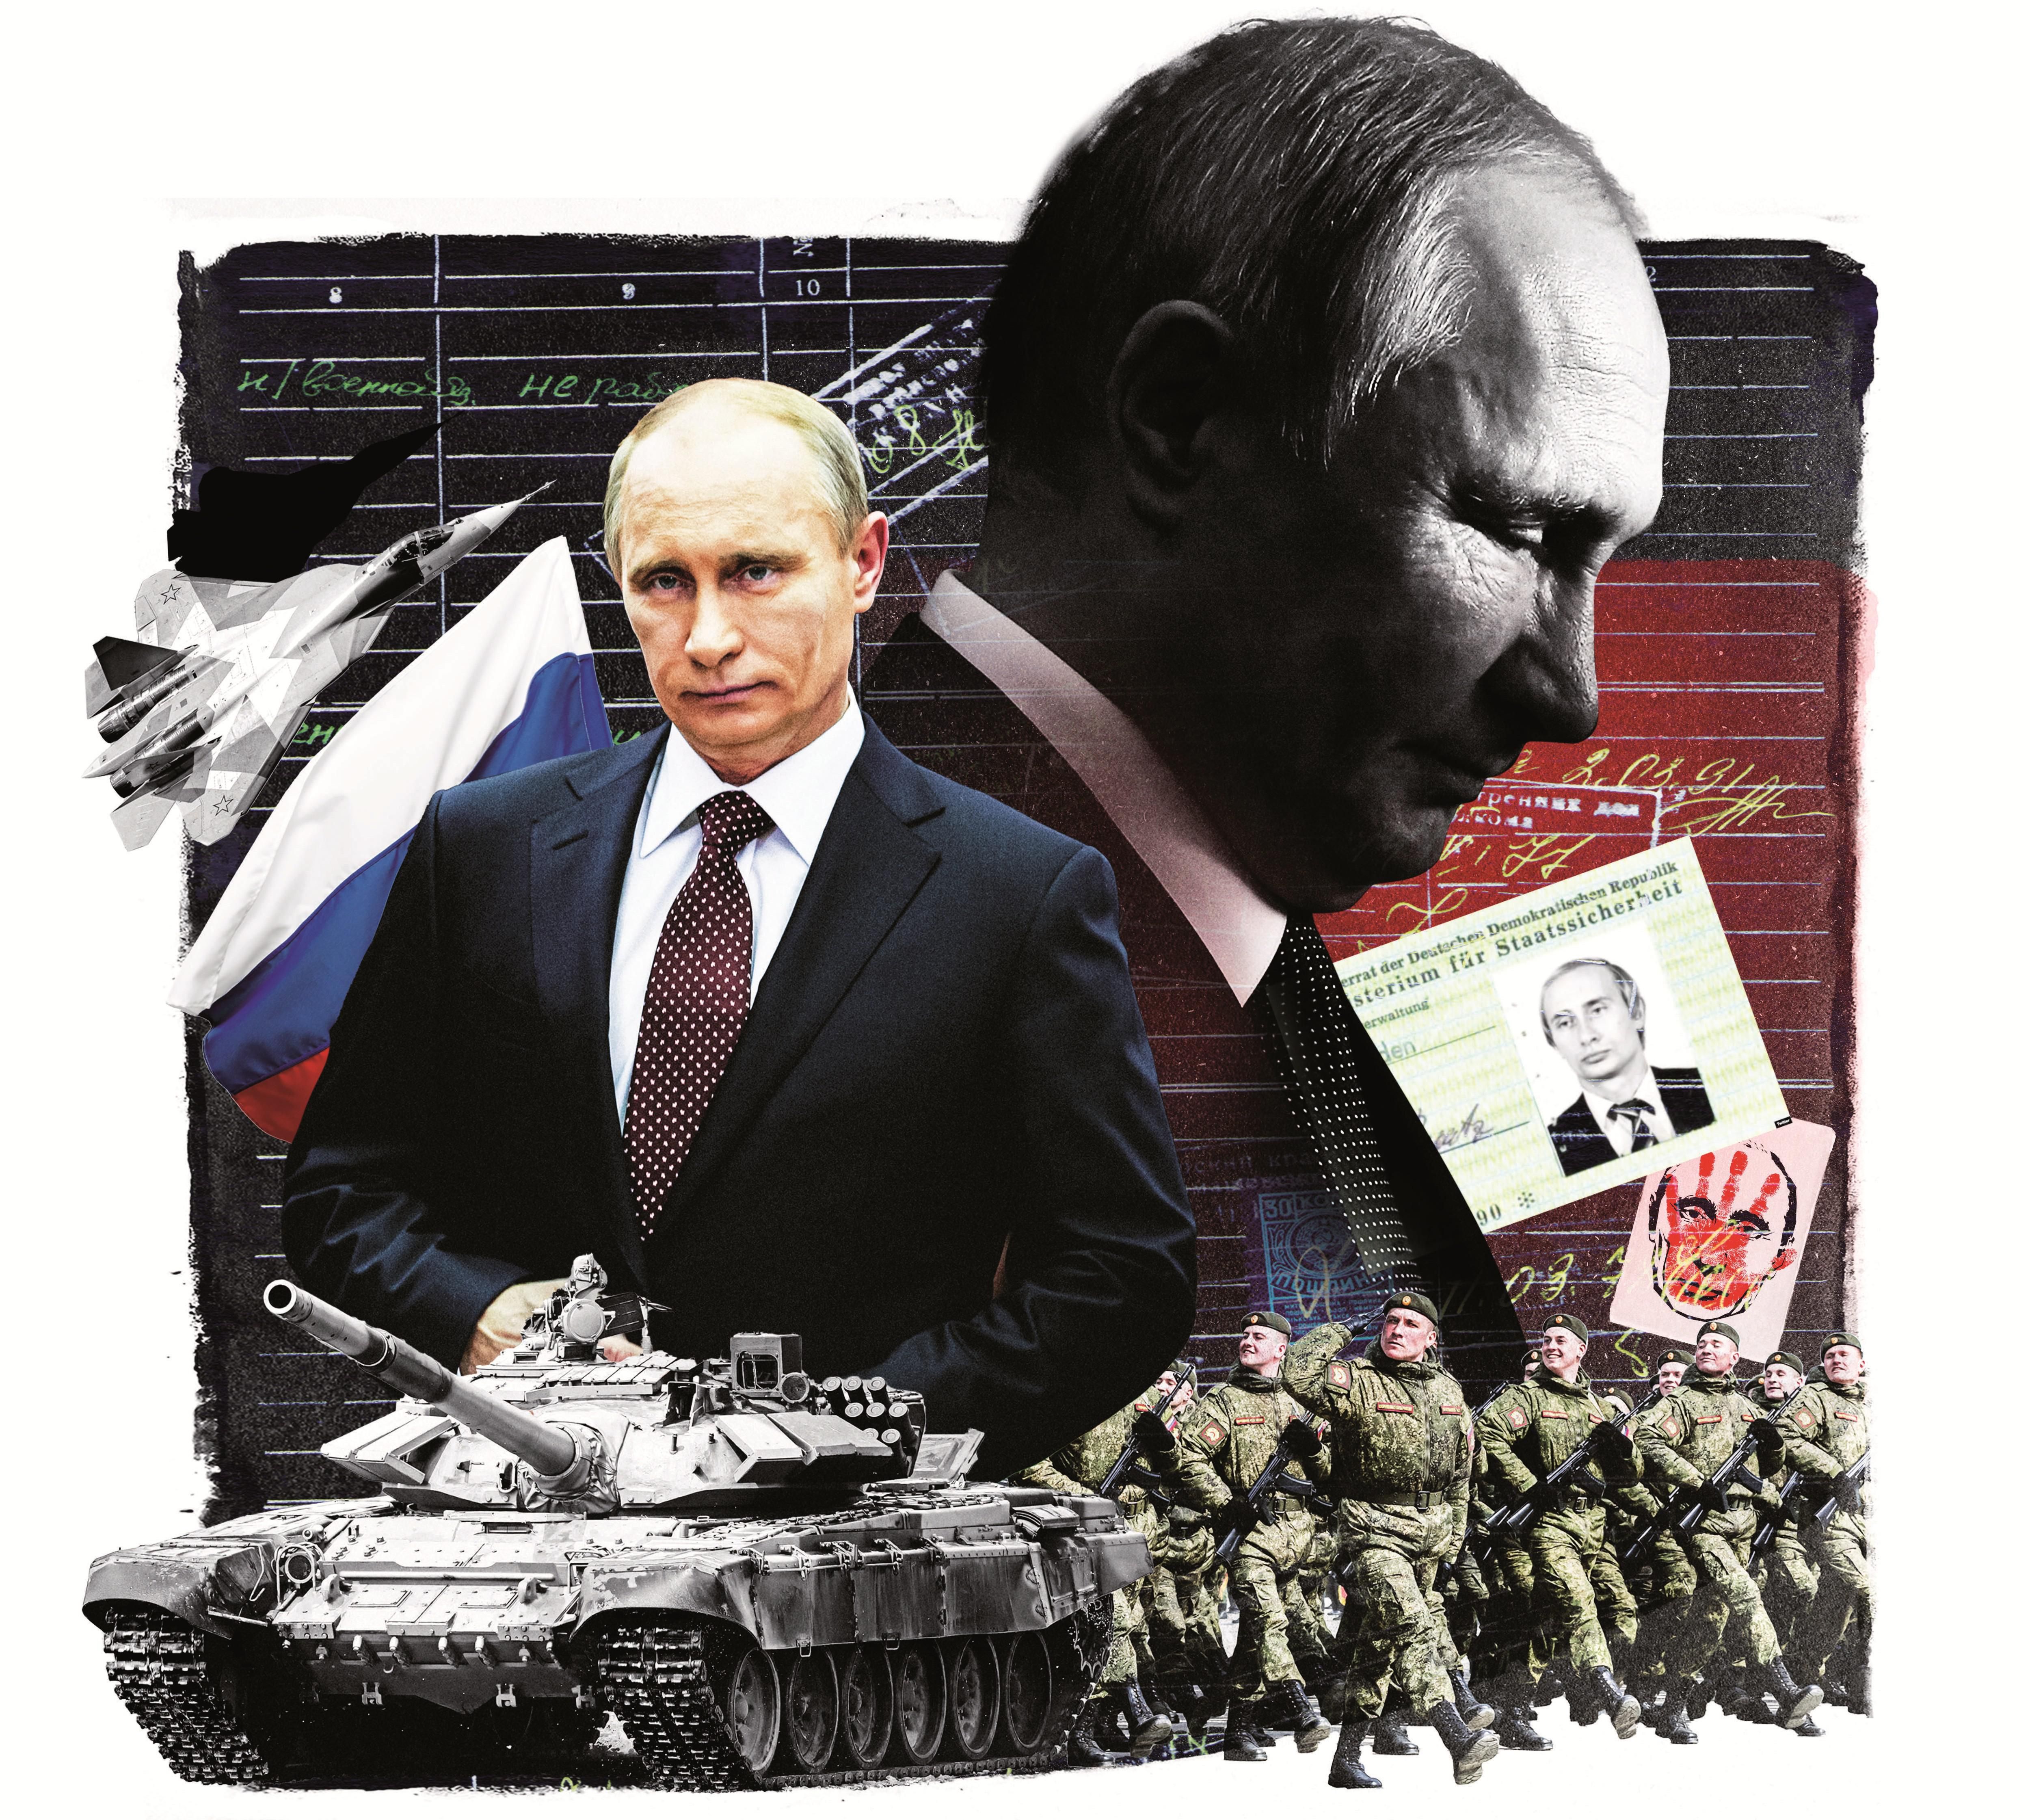 Putyin tankkal, katonával KGB igazolvánnyal